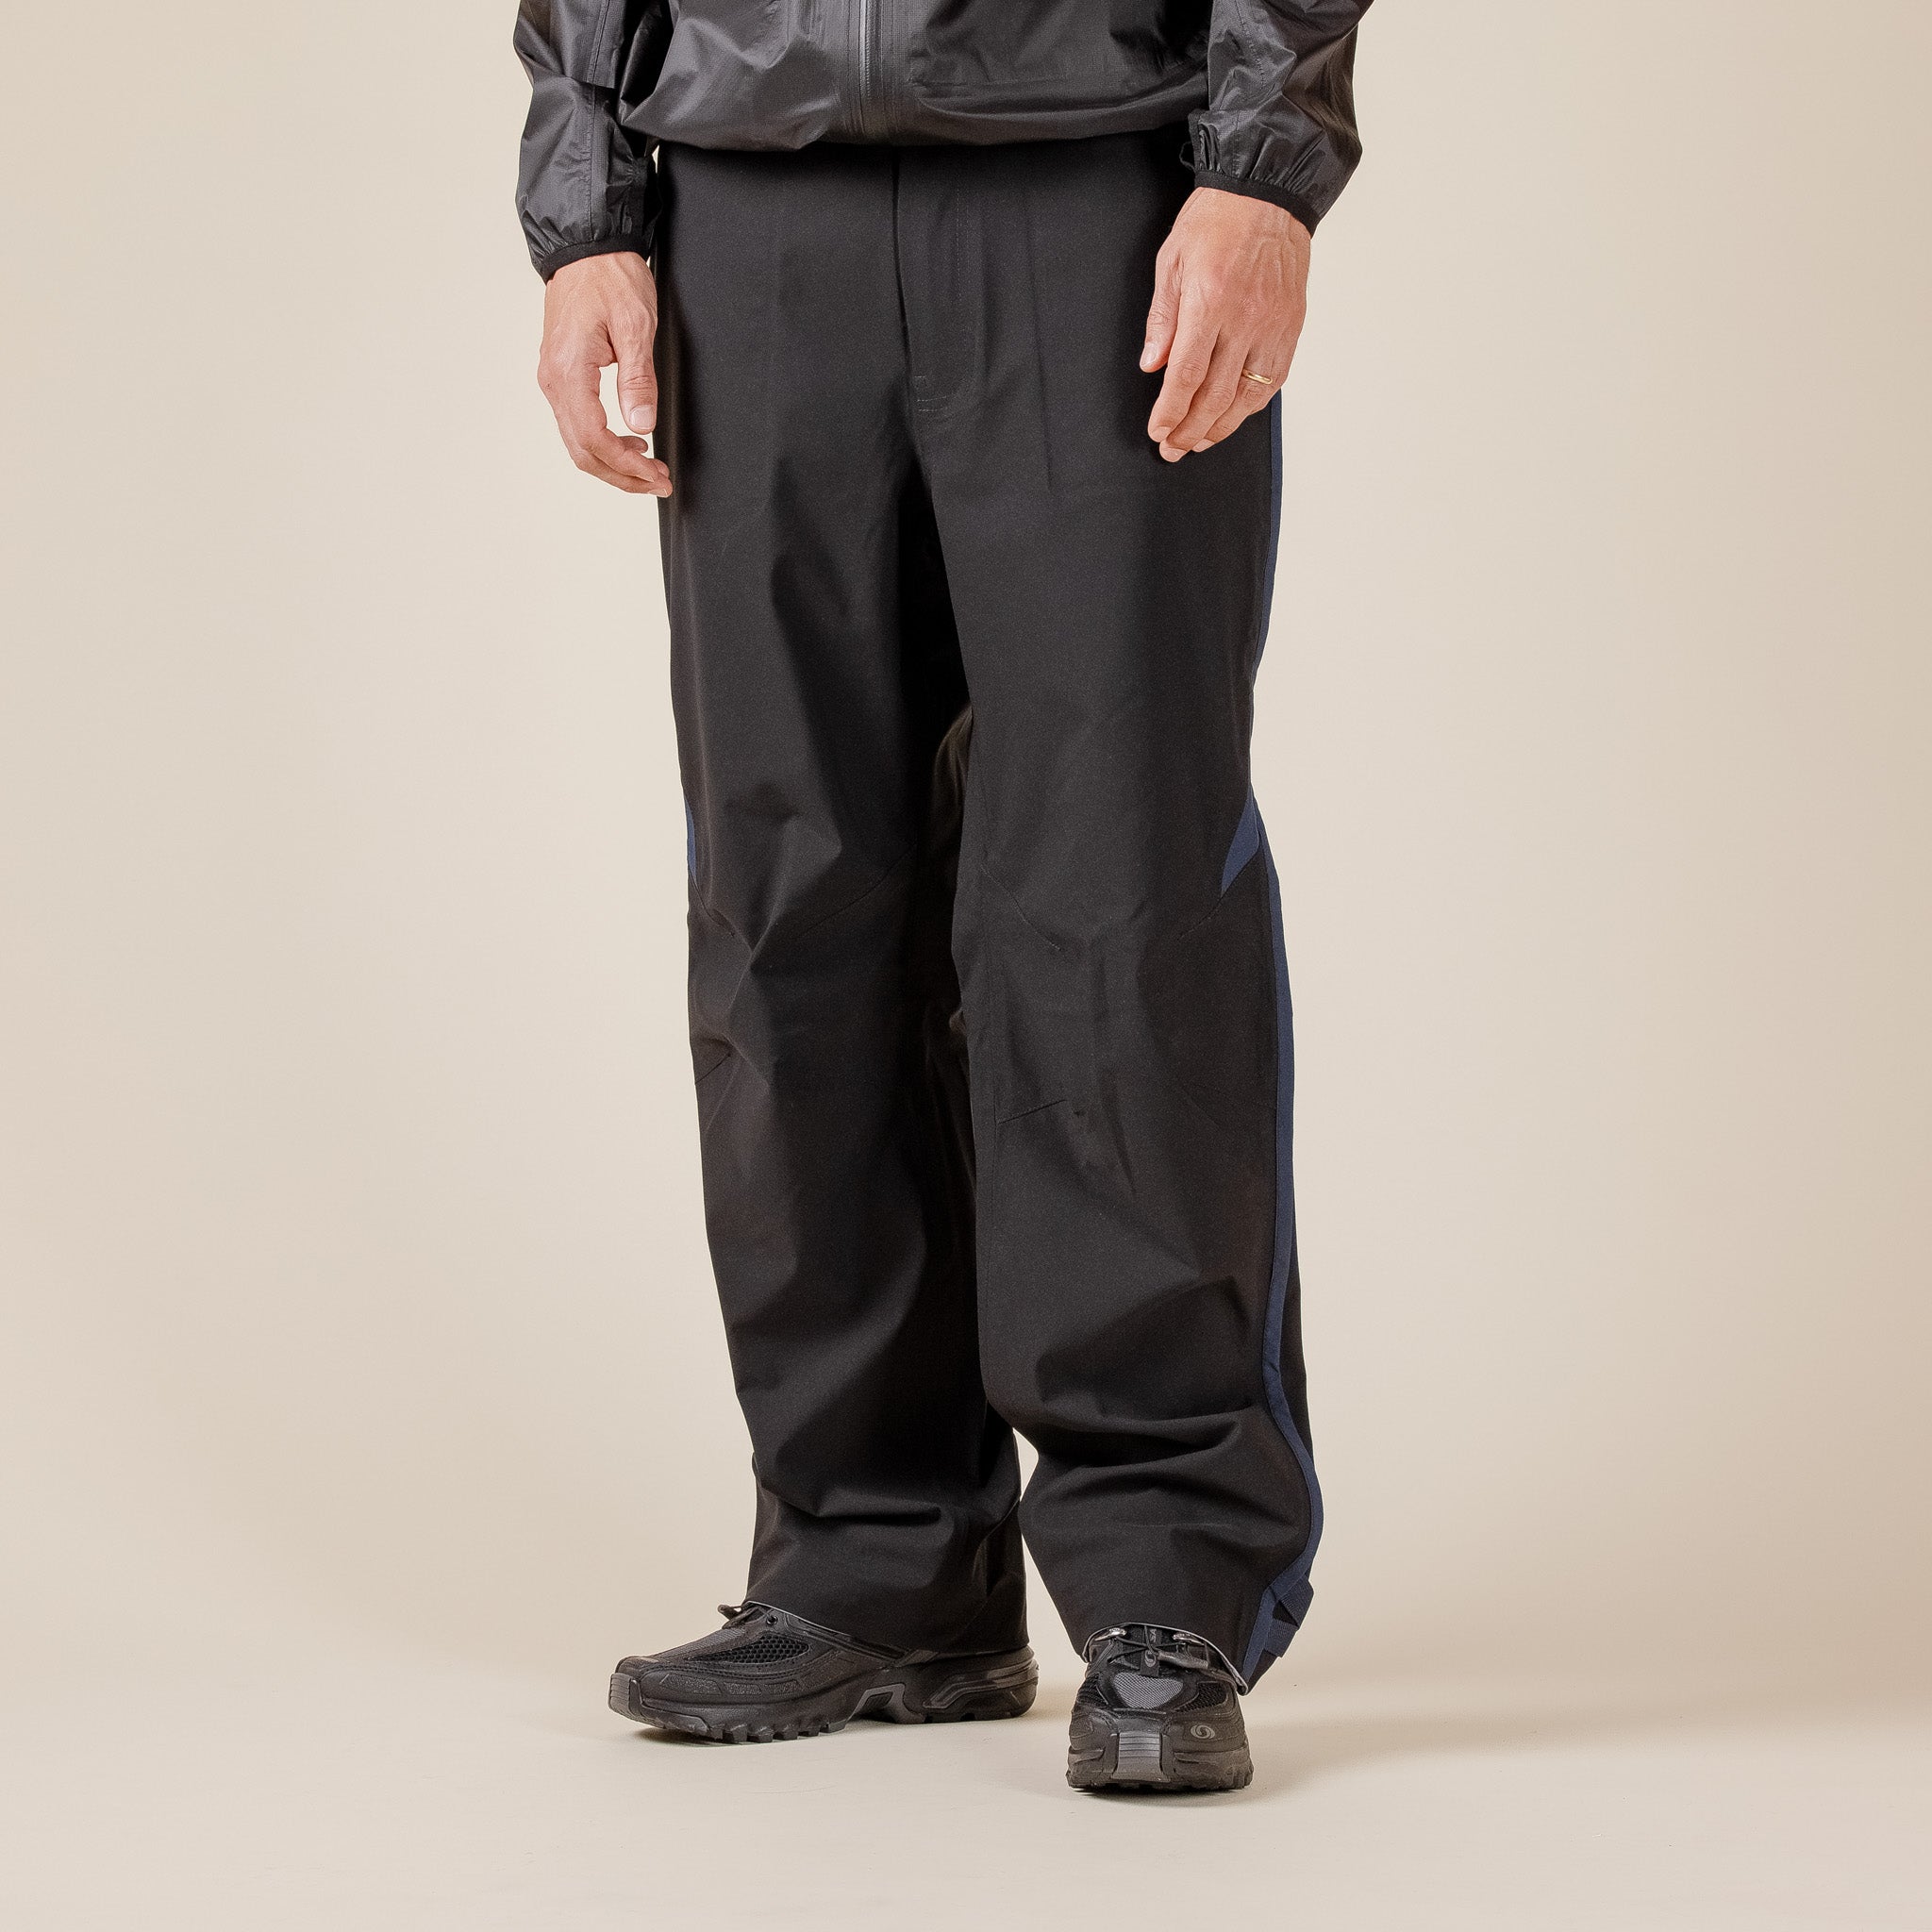  J EONGL I - Uniform Hardshell Pants - Black "J EONGL I stockists" "J EONGL I"